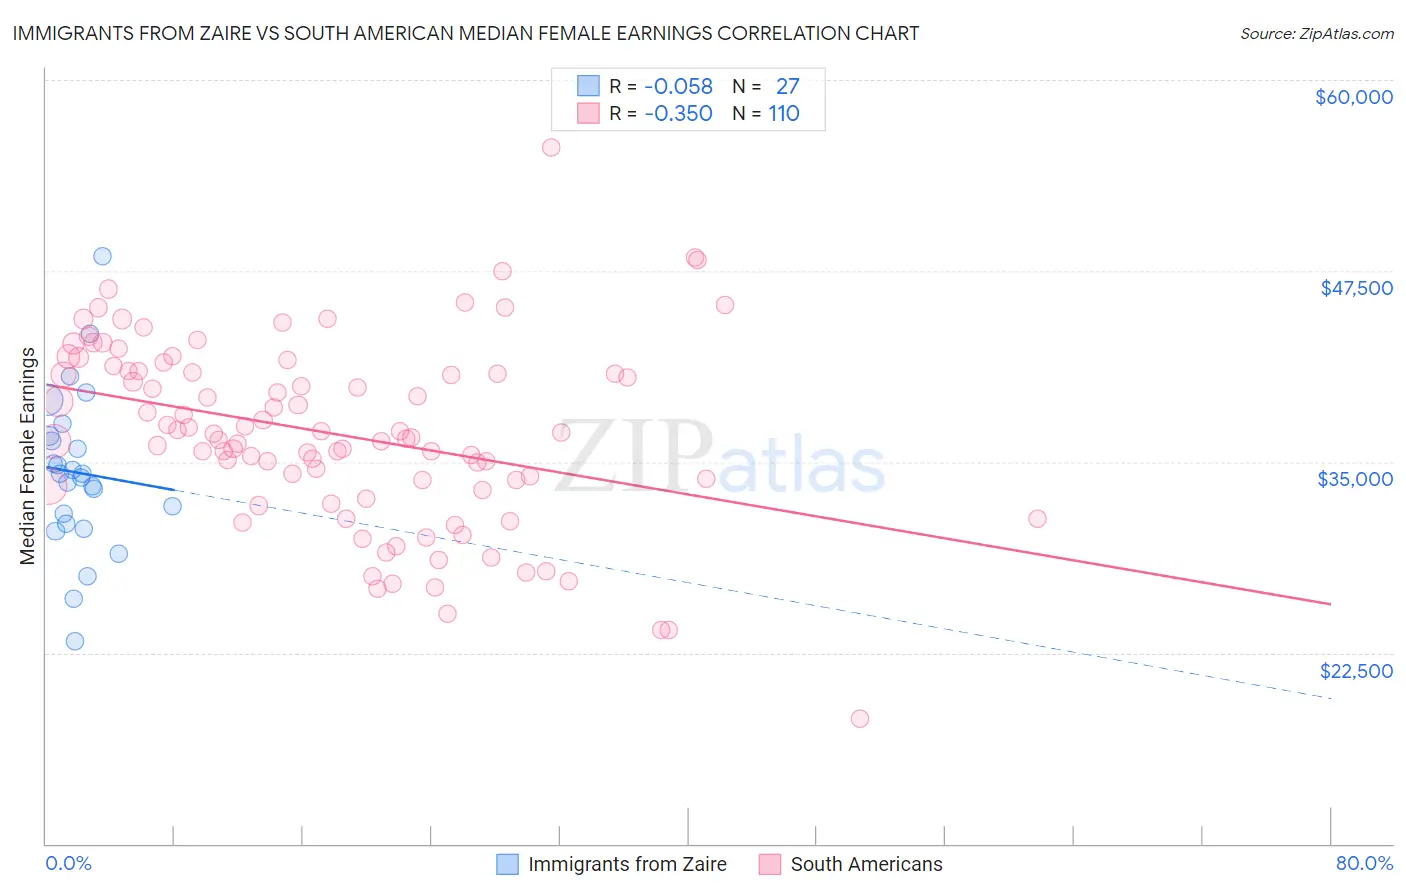 Immigrants from Zaire vs South American Median Female Earnings